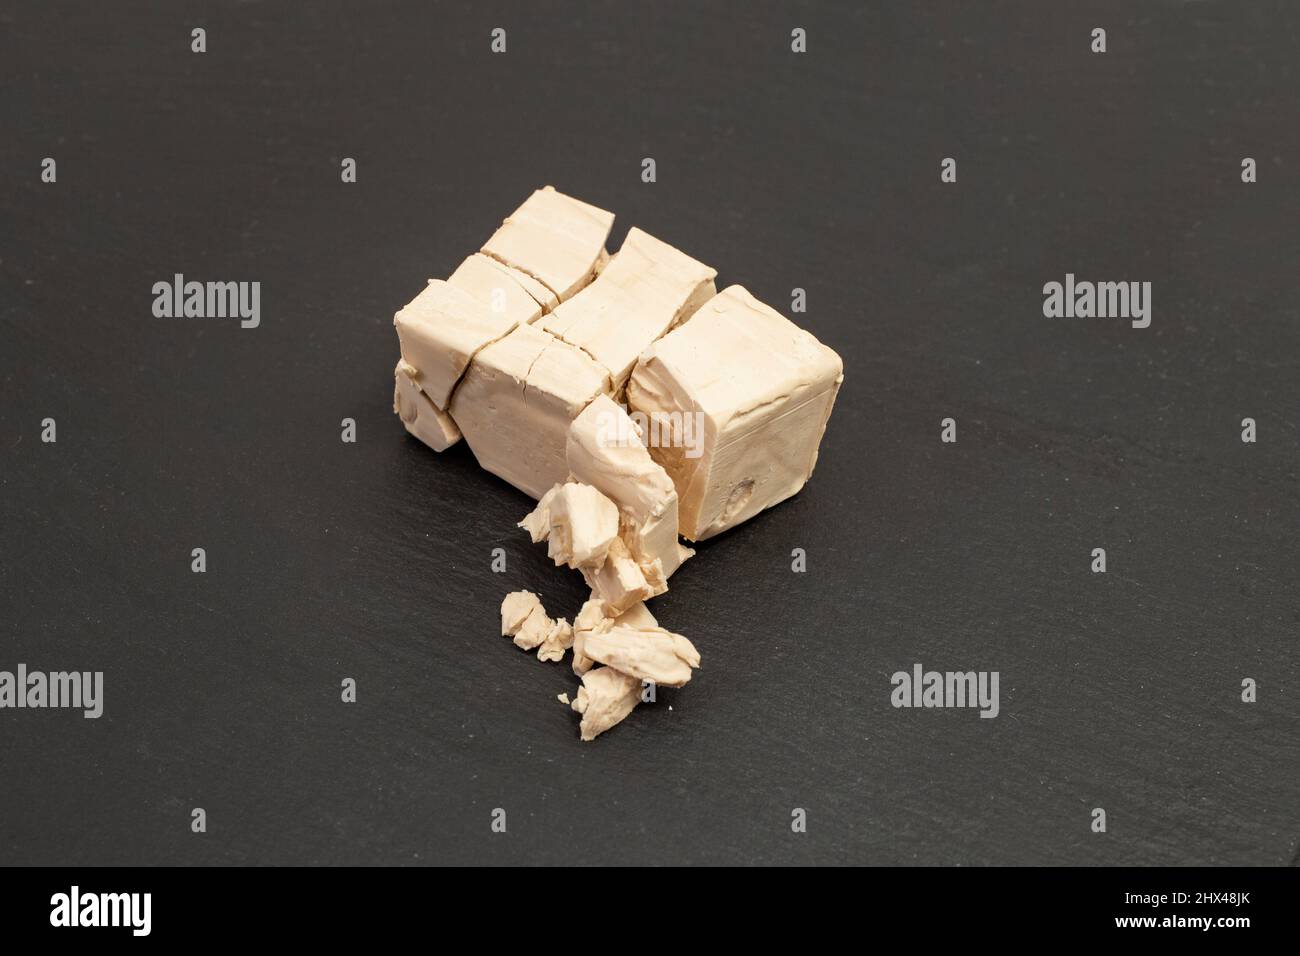 Fragmented cube of yeast isolated on black background Stock Photo